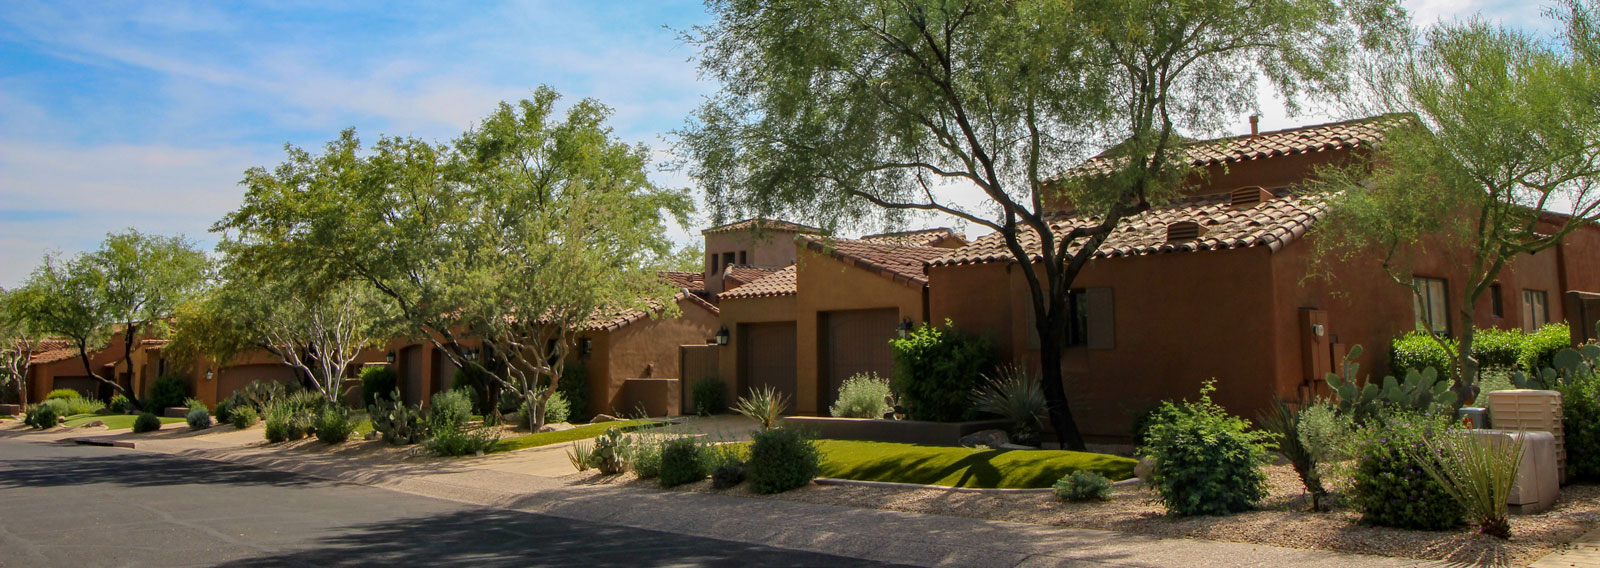 Prescott Reverse Mortgages, Information For Prescott, AZ.